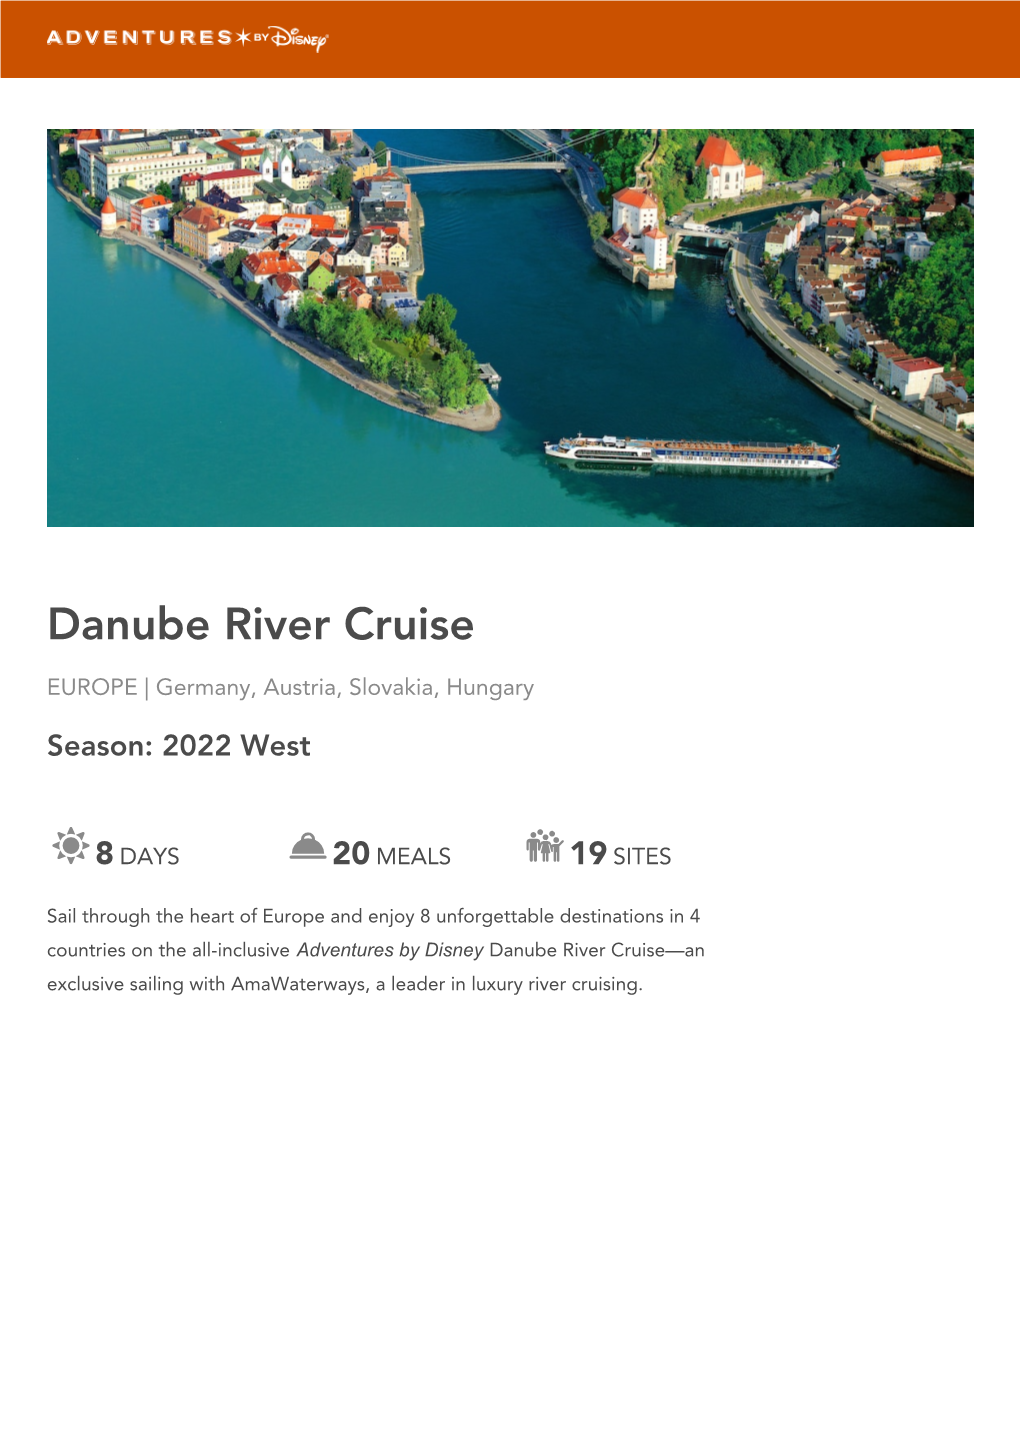 DANUBE RIVER CRUISE Europe | Germany, Austria, Slovakia, Hungary